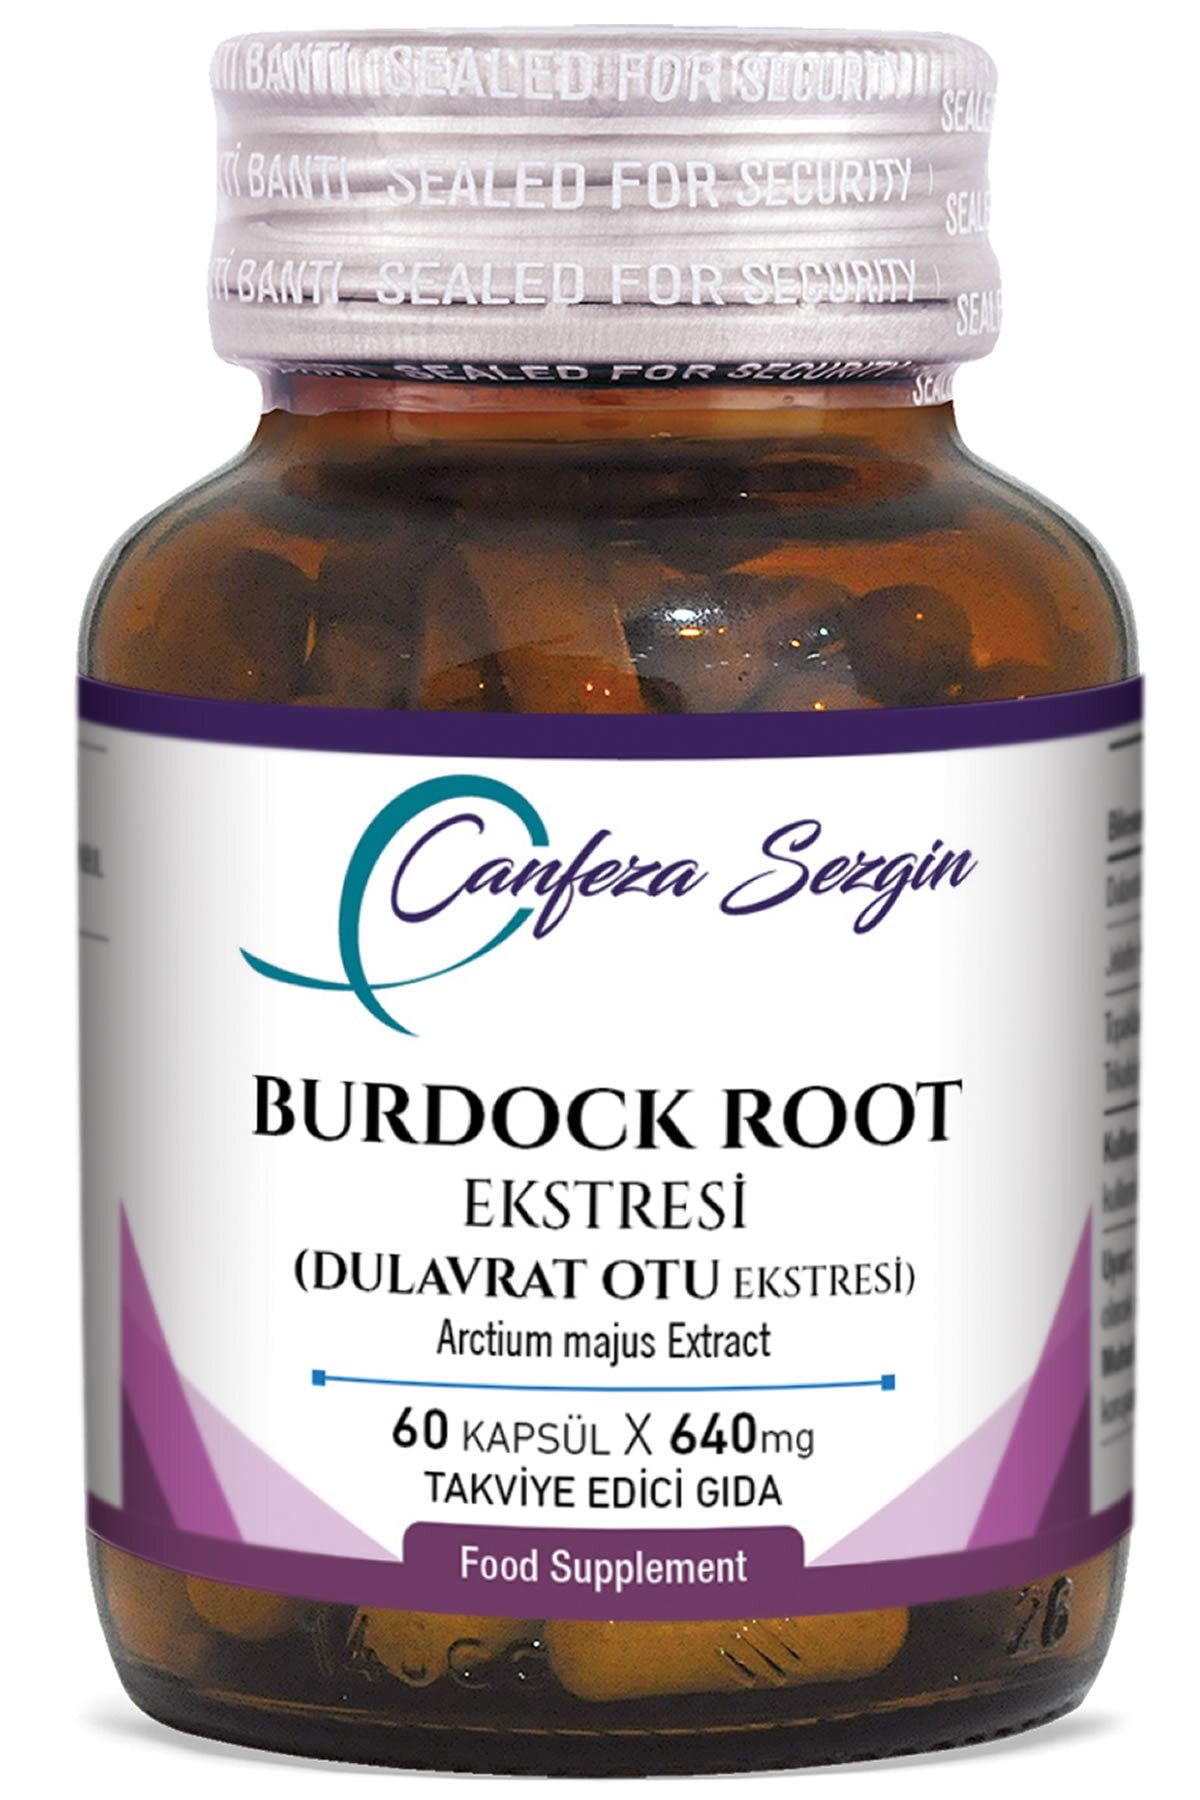 Canfeza Sezgin Burdock Root (Dulavrat Otu) Ekstresi 60 Kapsül